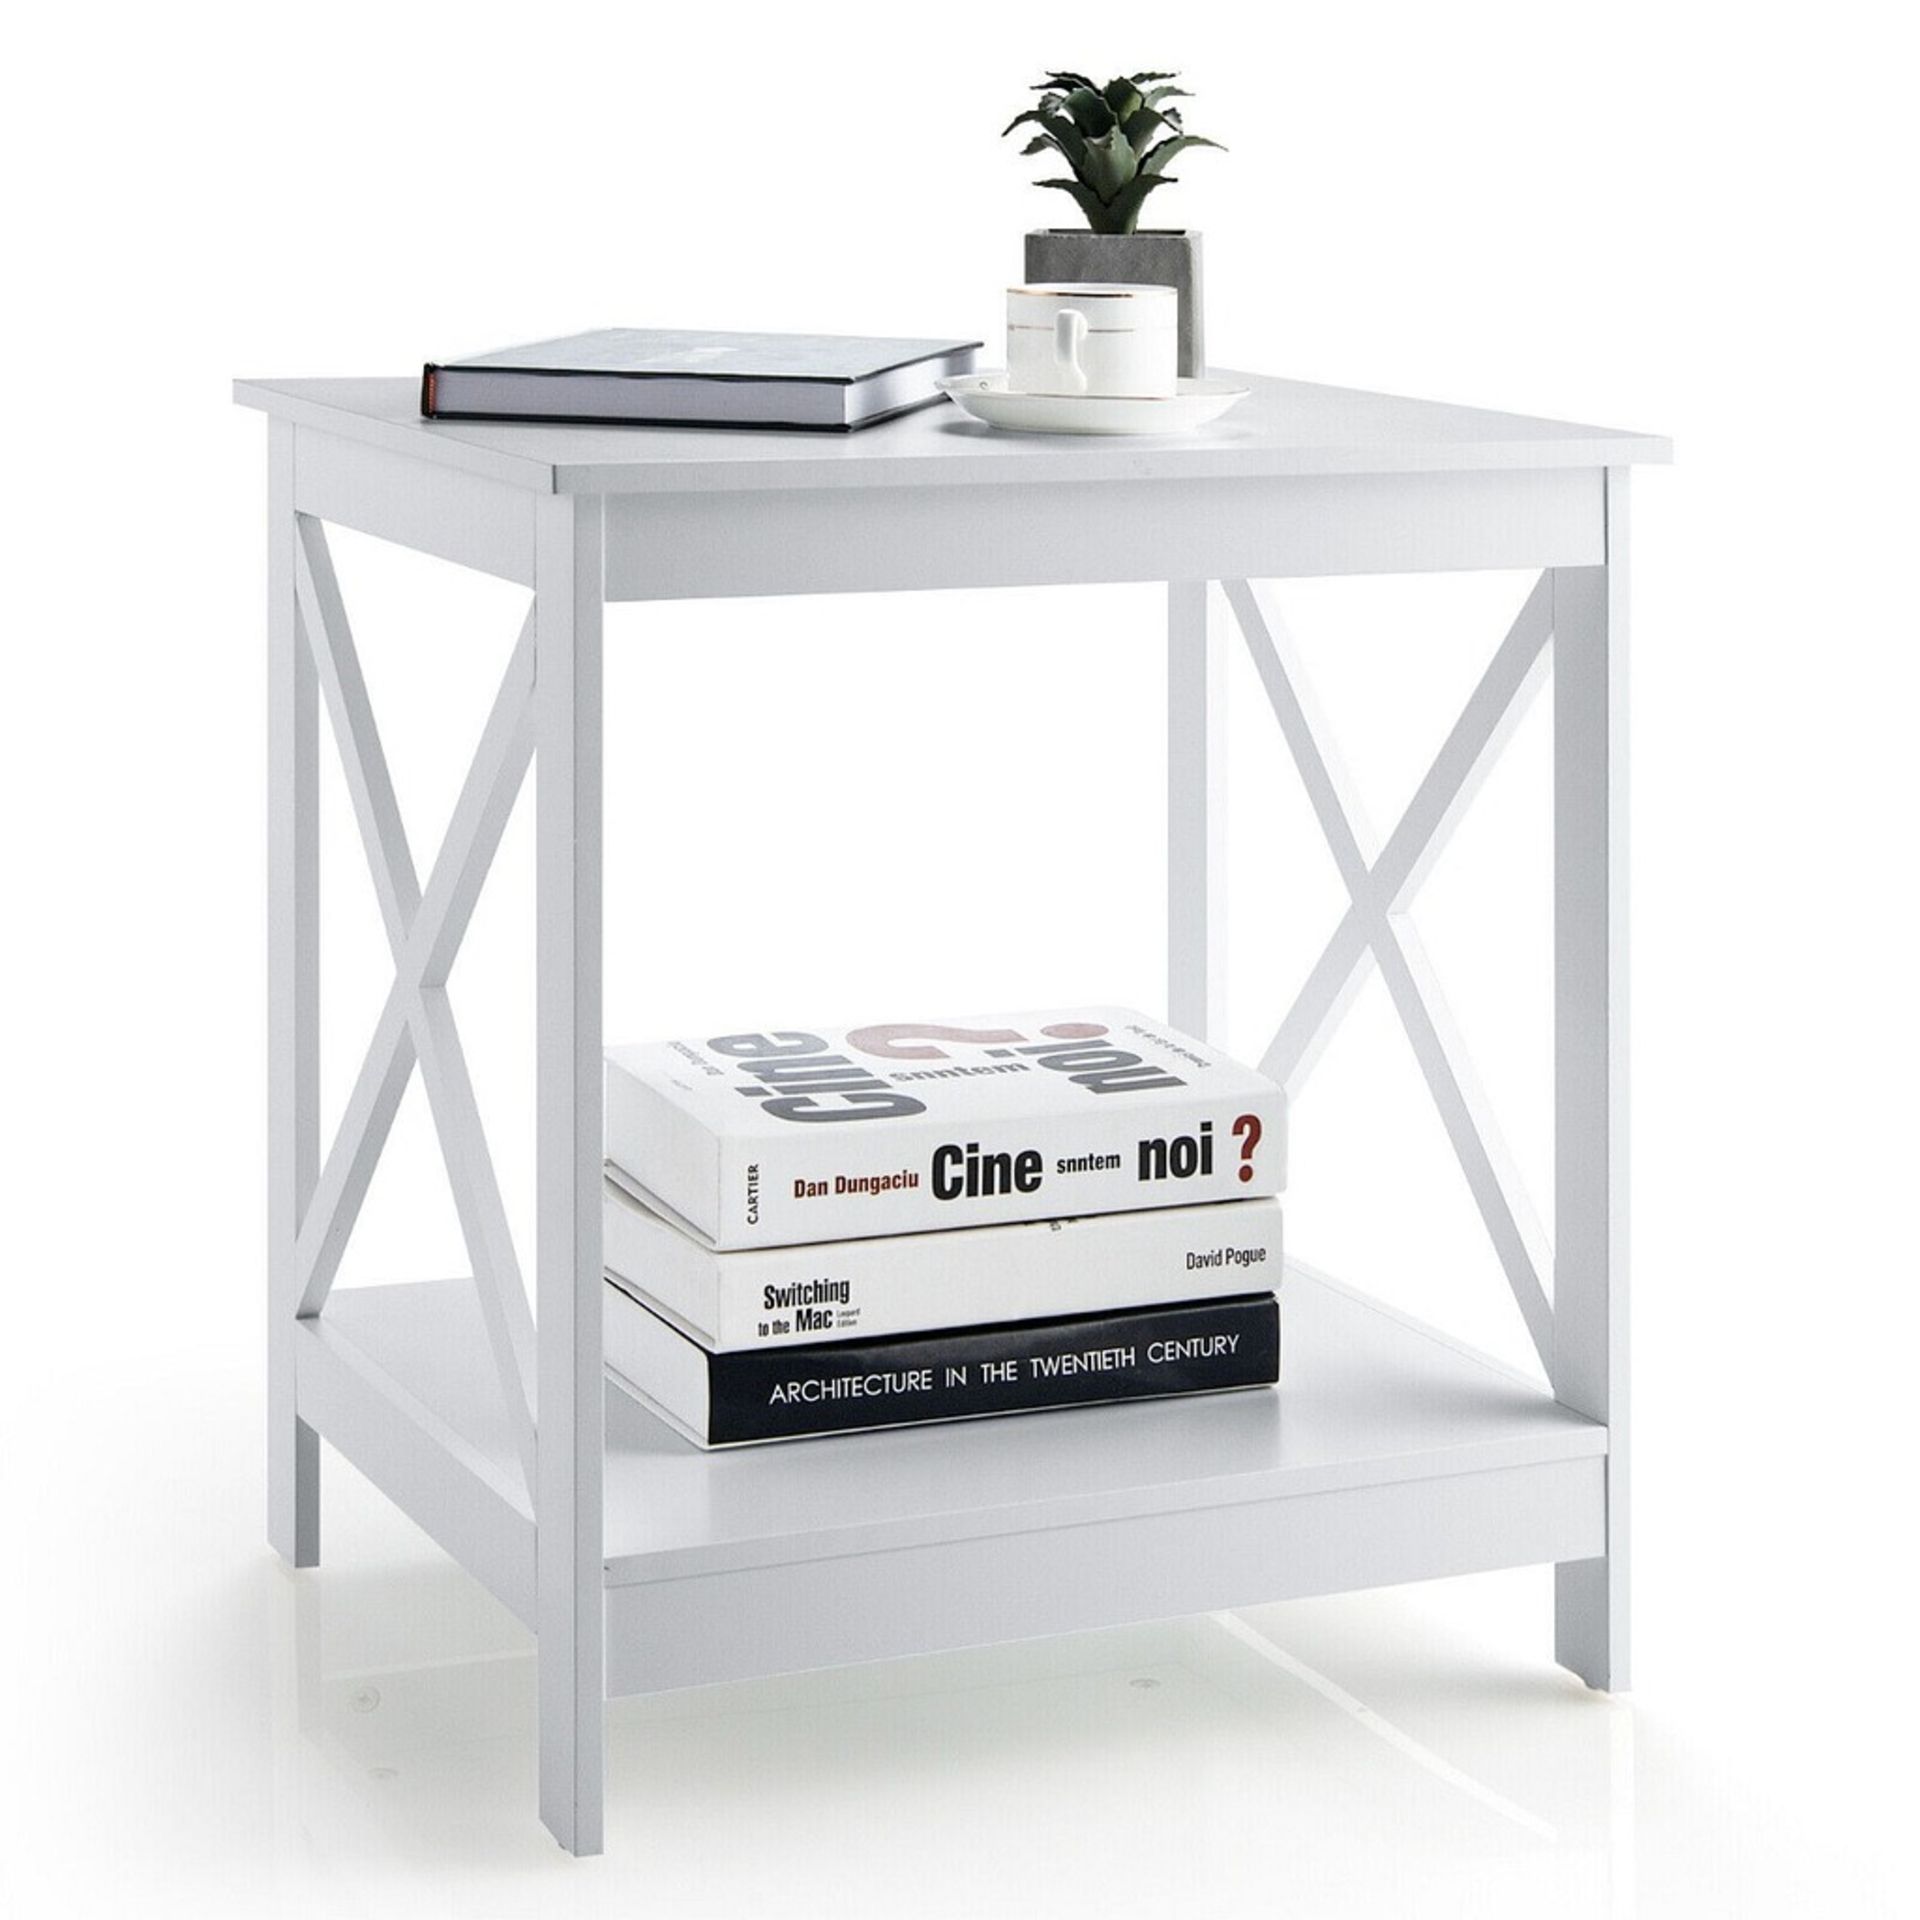 2-Tier Modern Wooden X-Shaped Bedside Table for Living Room Bedroom Office-White - ER53